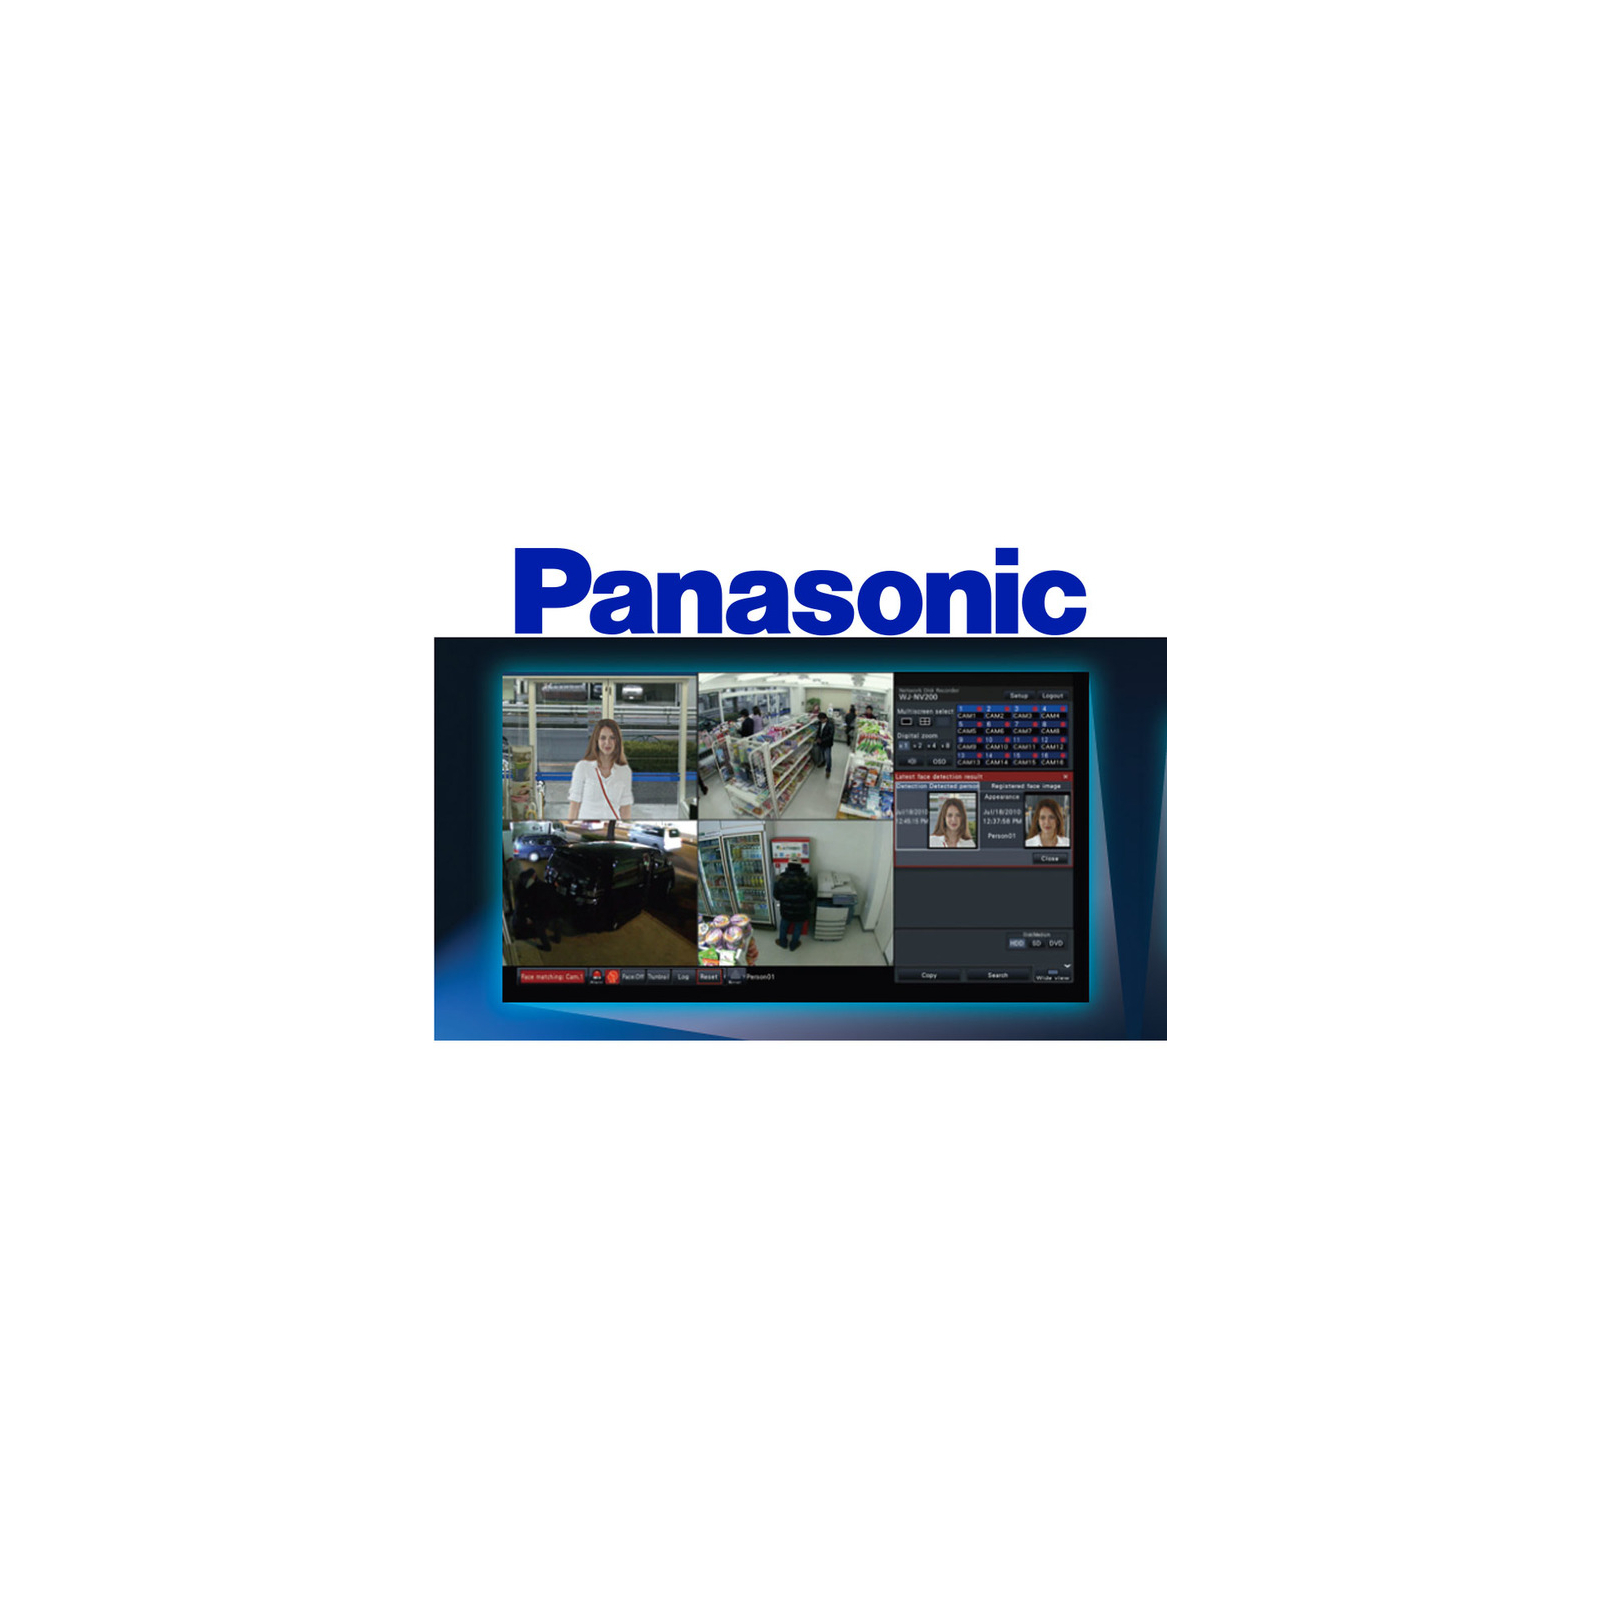 ПО для мультимедиа Panasonic Extension Additional Business Intelligence Kit (WJ-NVF20E)